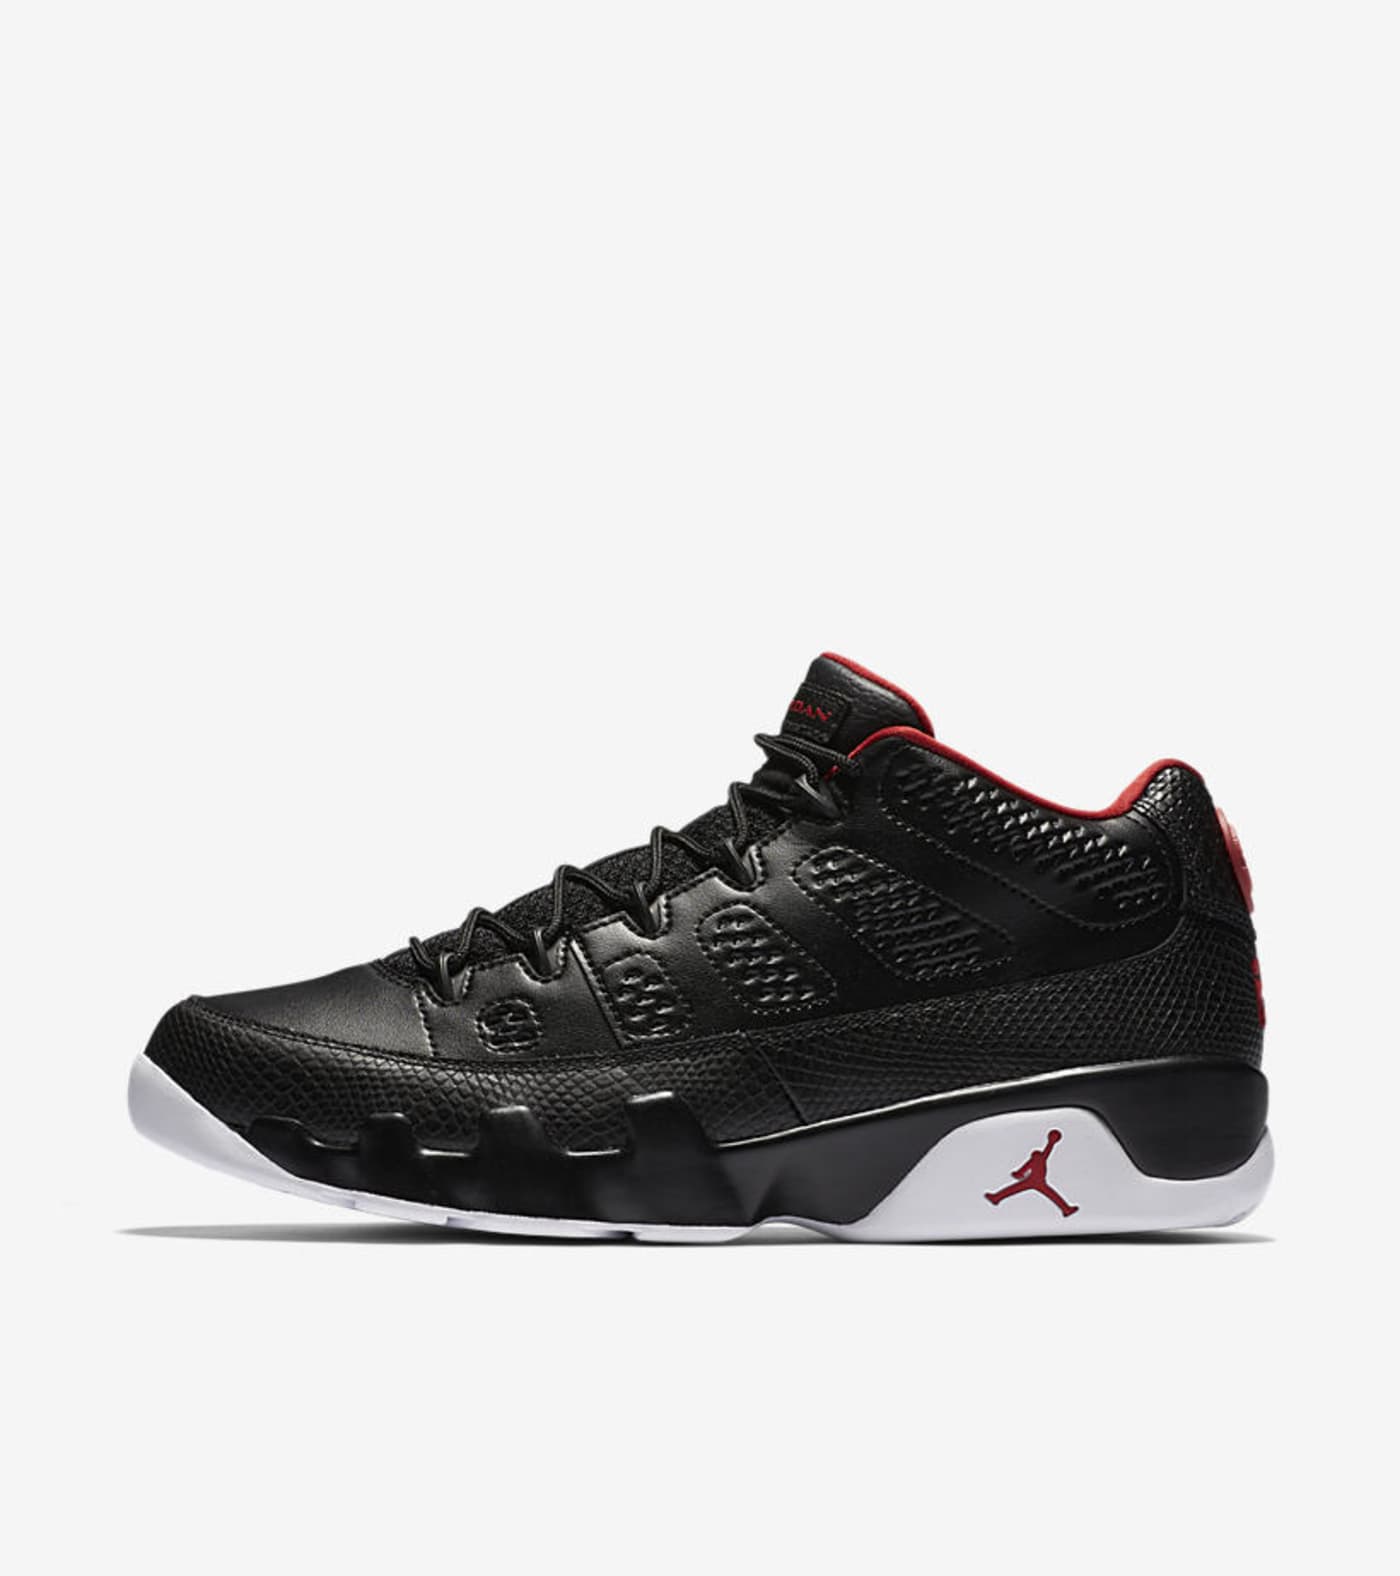 Air Jordan IX Low “Snakeskin” Still Available | Complex